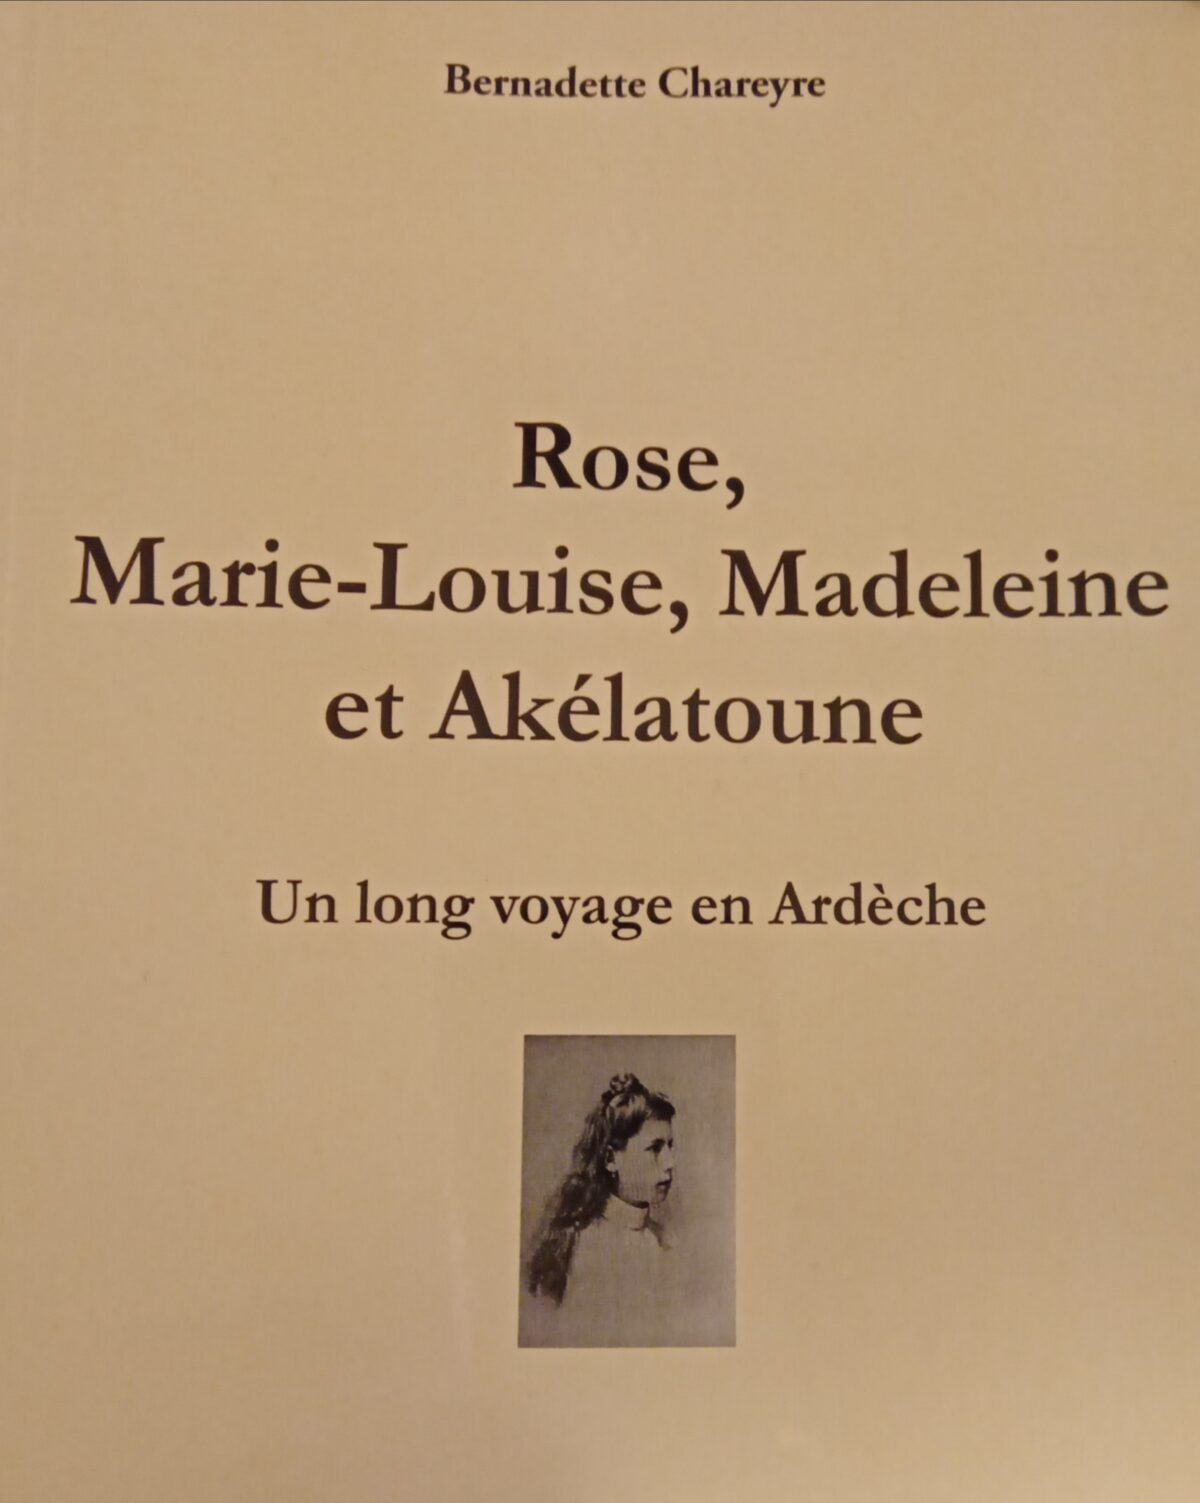 Rose, Mari-Louise, Madeleine et Akélatoune, un long voyage en Ardèche de Bernadette Chareyre